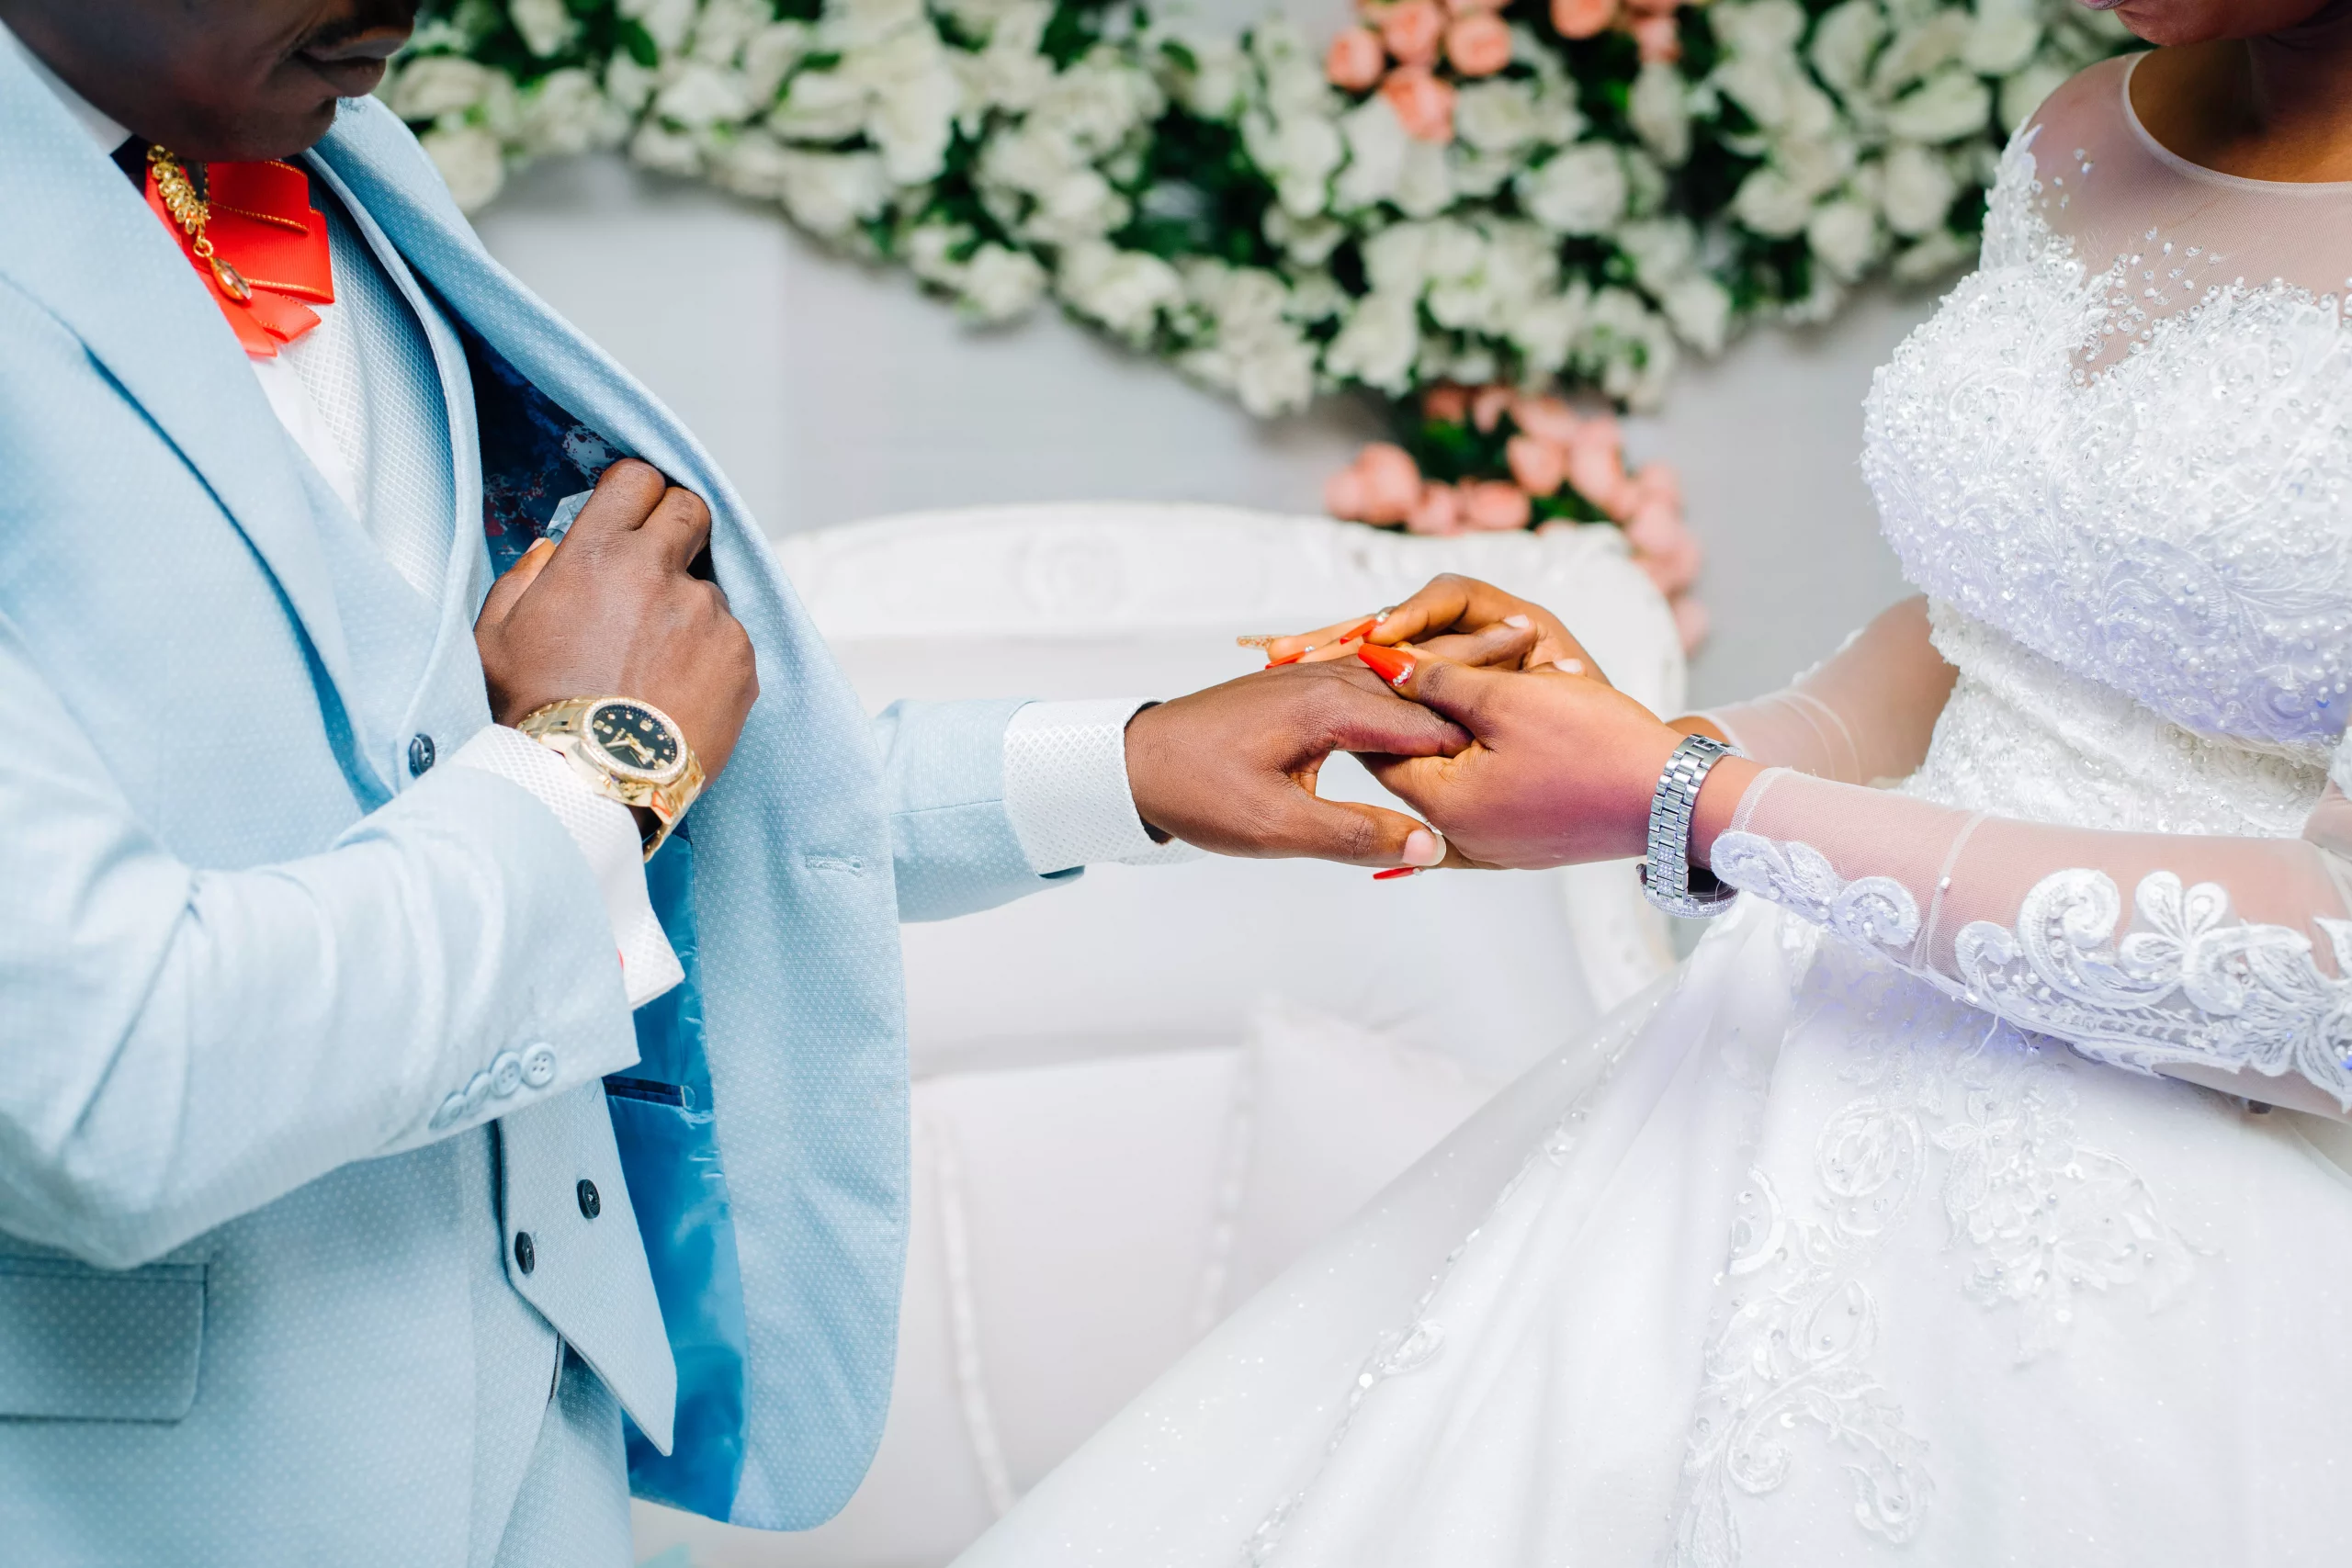 exchange of rings at a nigerian wedding